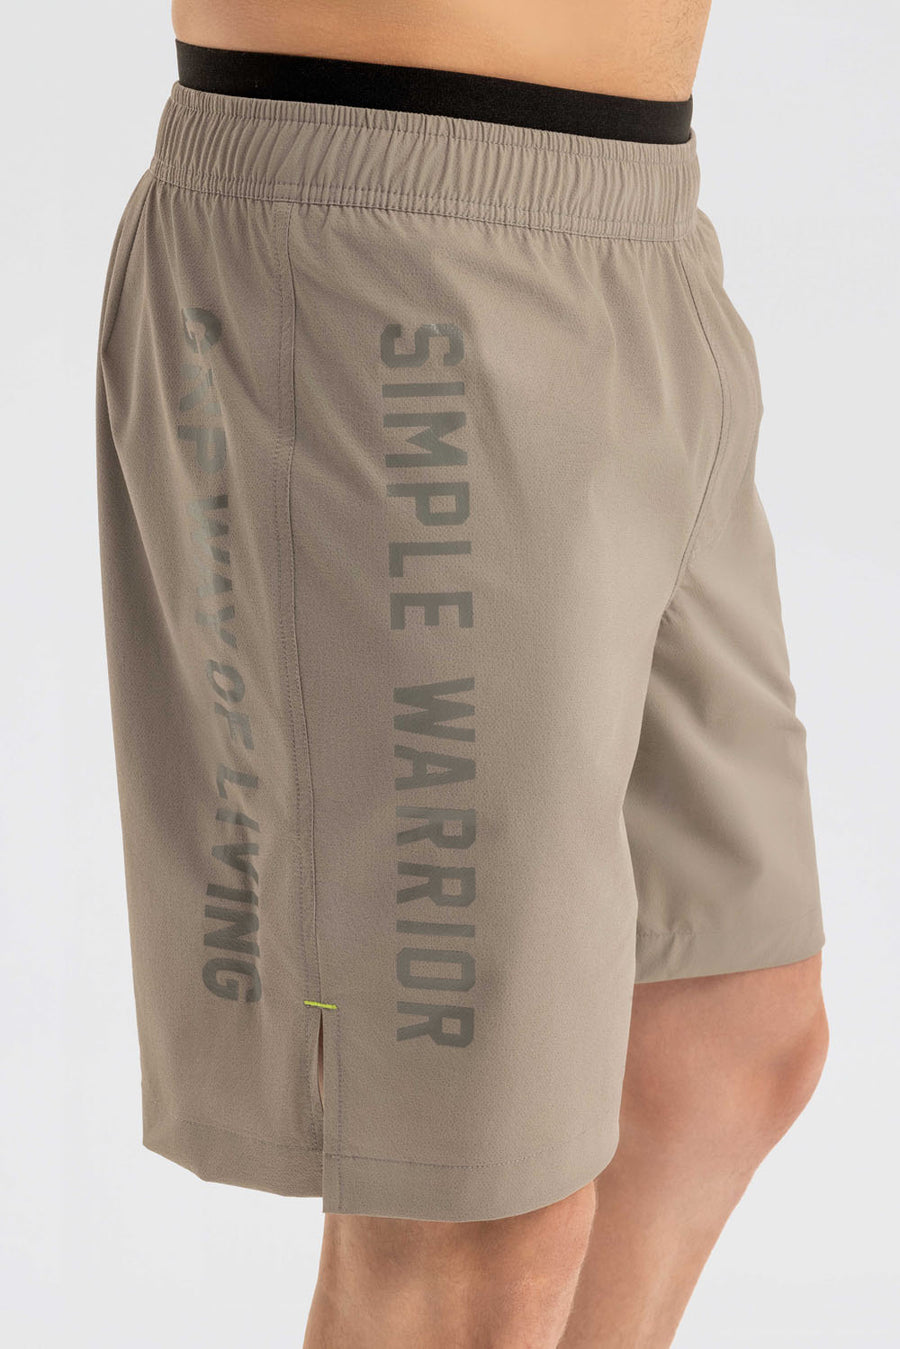 Simple Warrior Shorts Grey